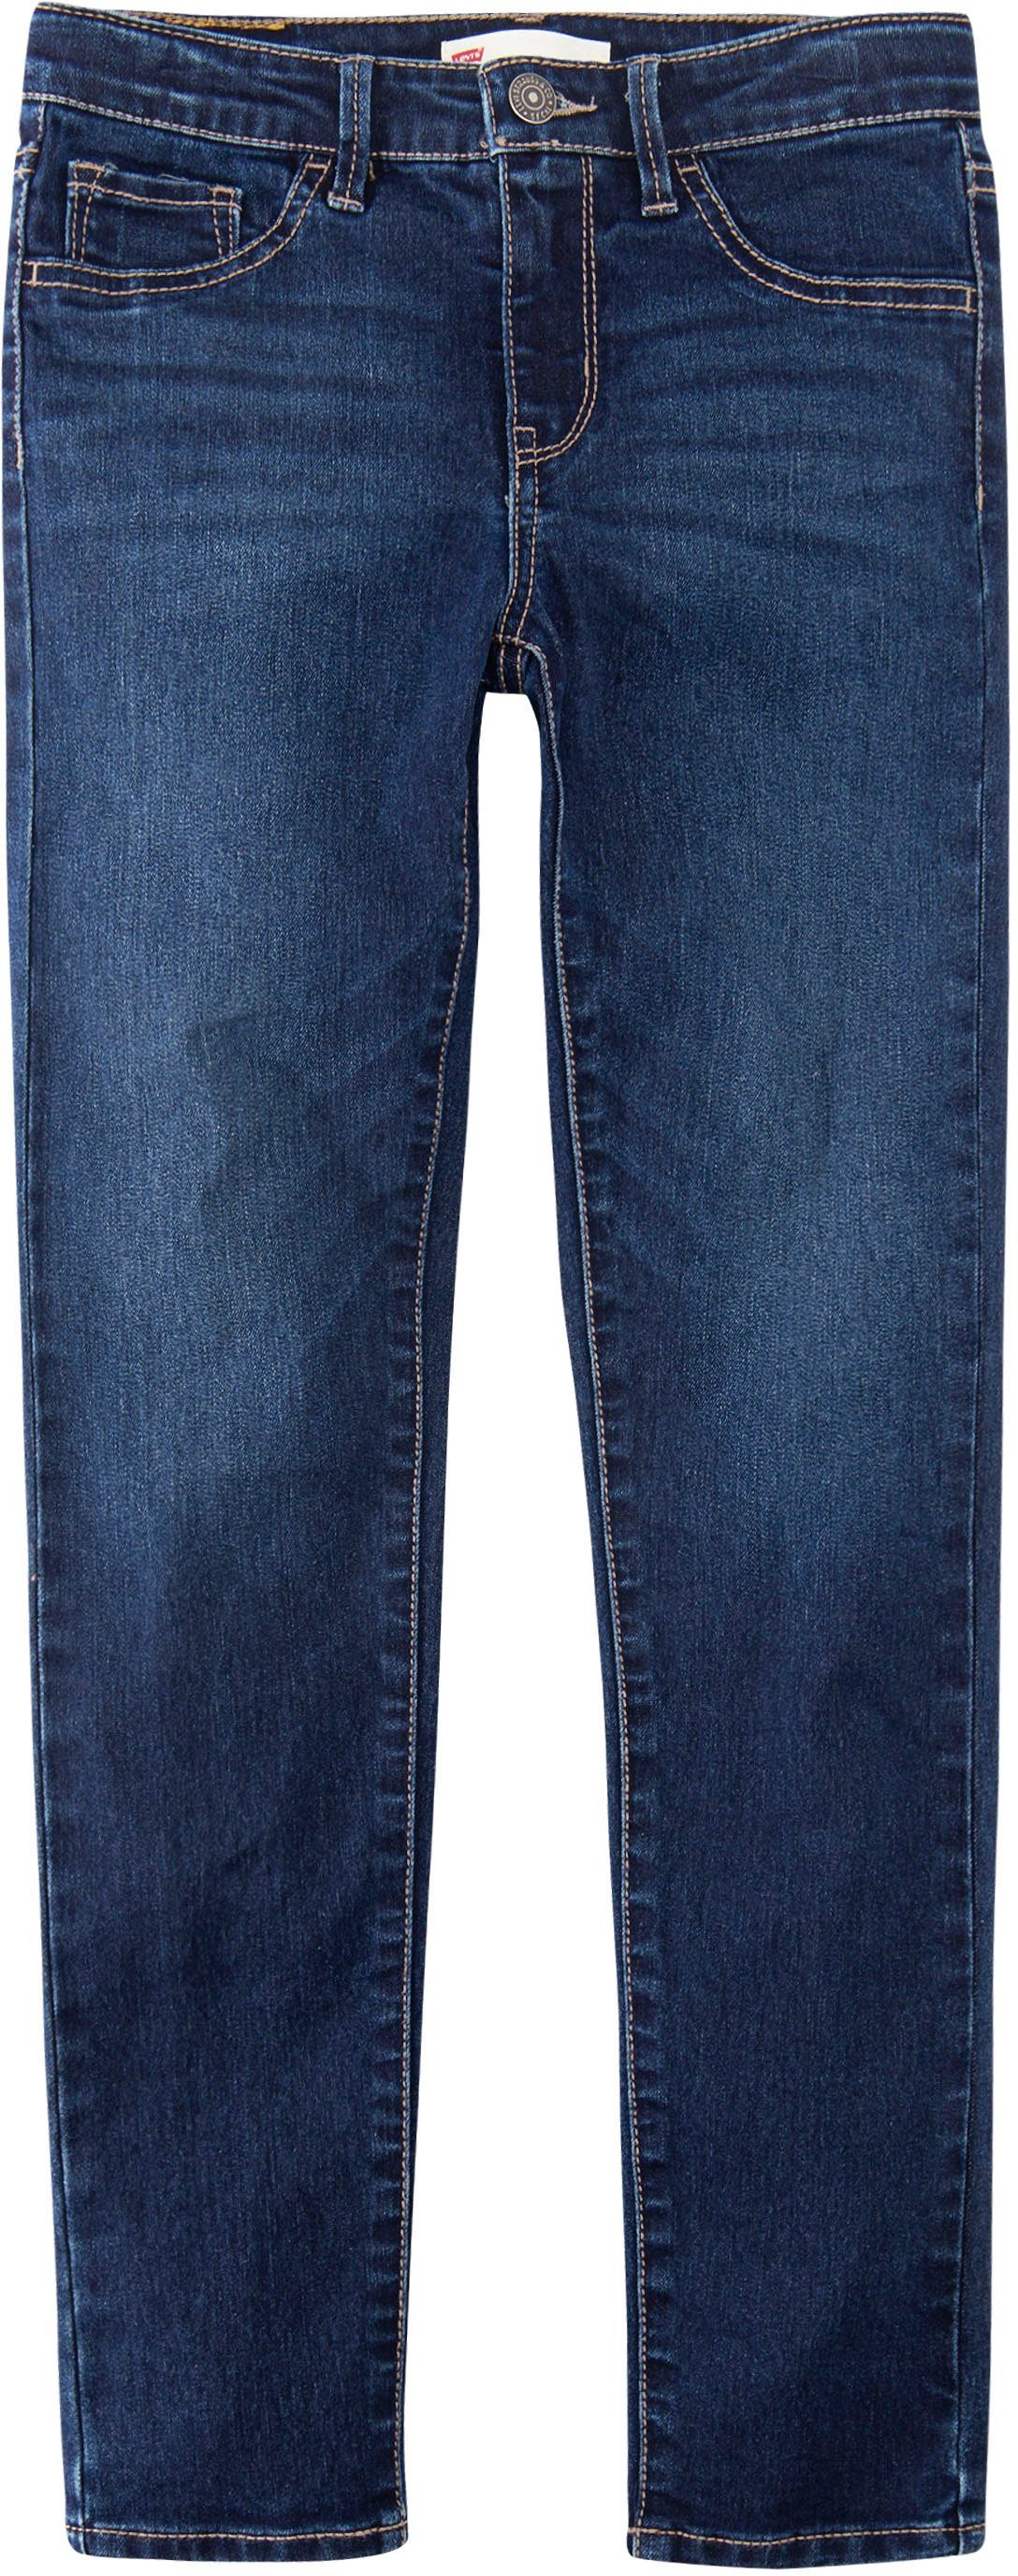 Kids SUPER GIRLS used Stretch-Jeans SKINNY FIT Levi's® denim blue for JEANS 710™ dark